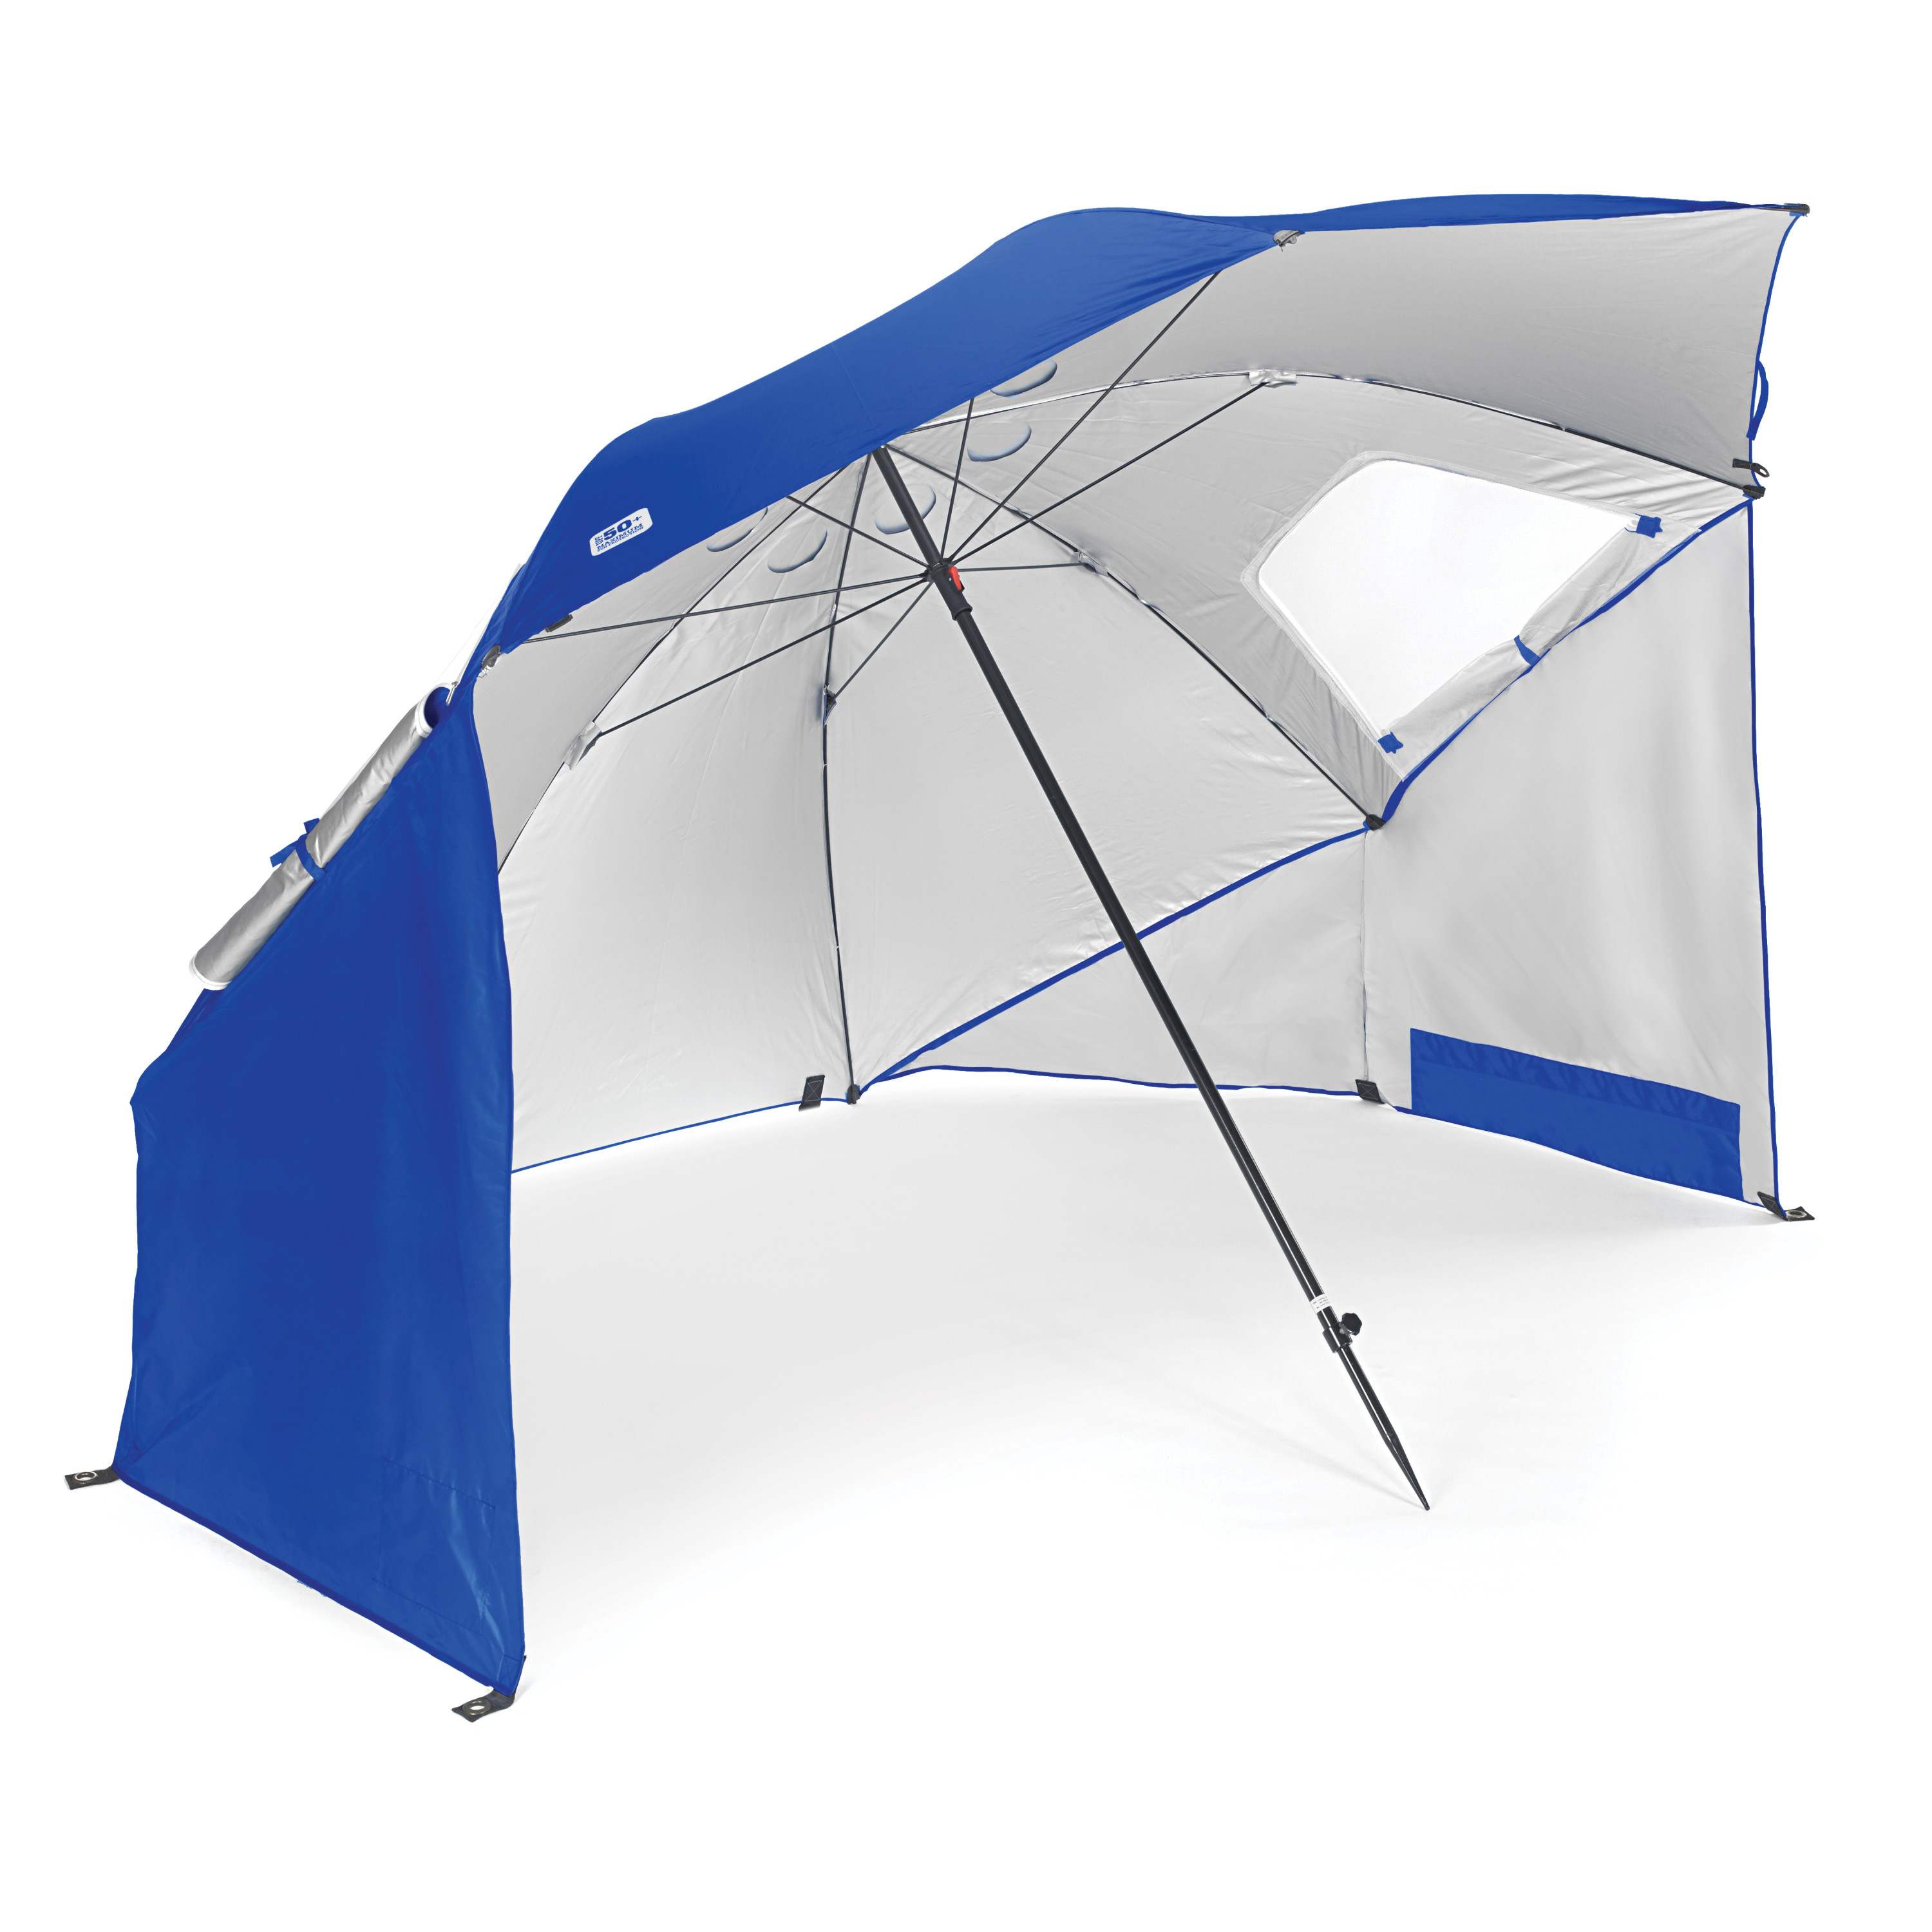 Sport-Brella Portable All-Weather & Sun Umbrella, 8 foot Canopy, Blue - image 1 of 7